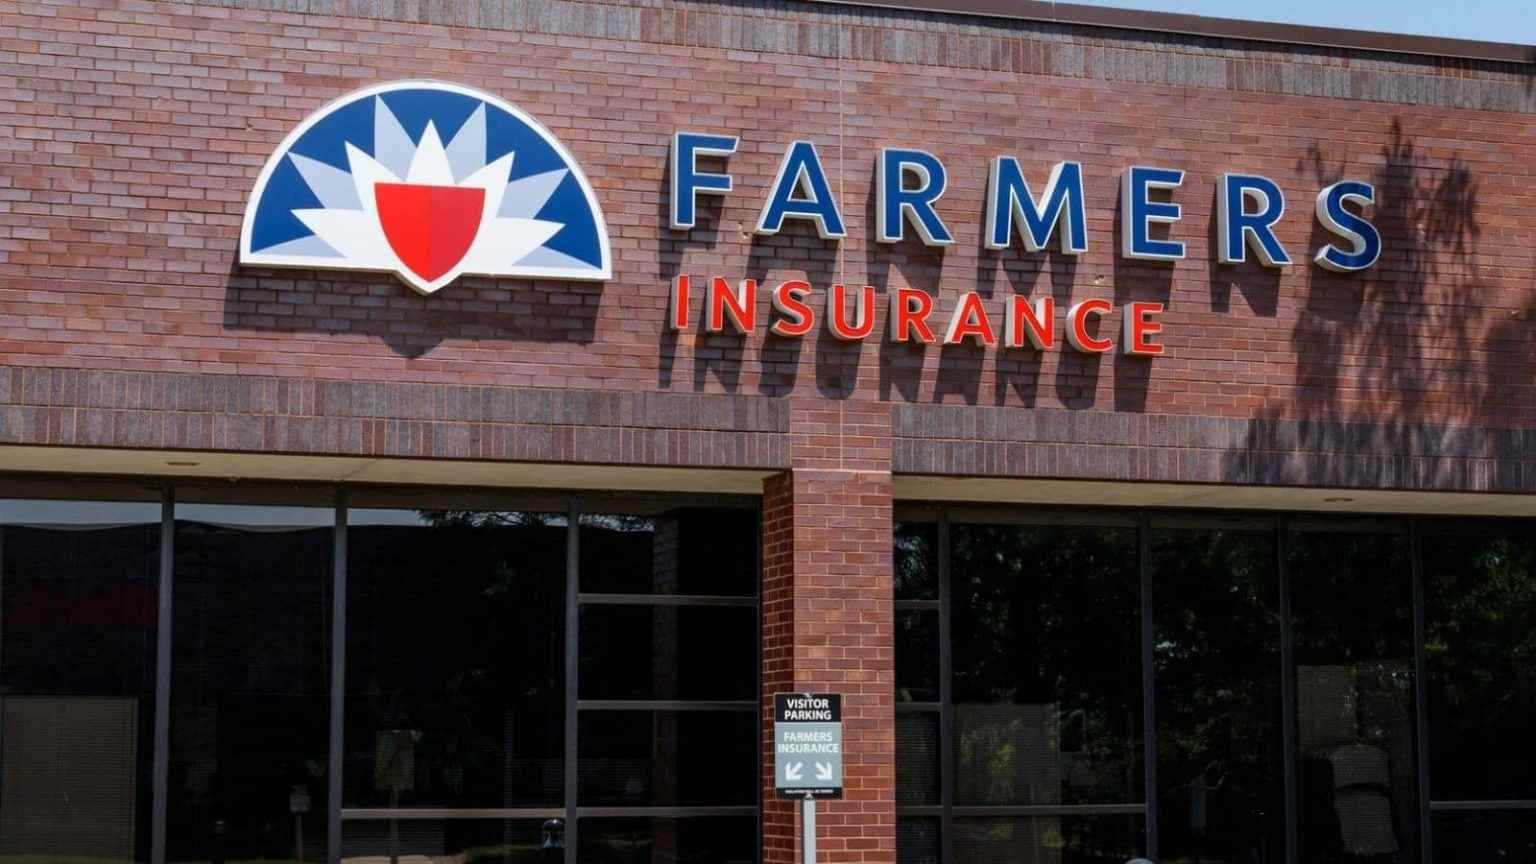 Farmers insurance